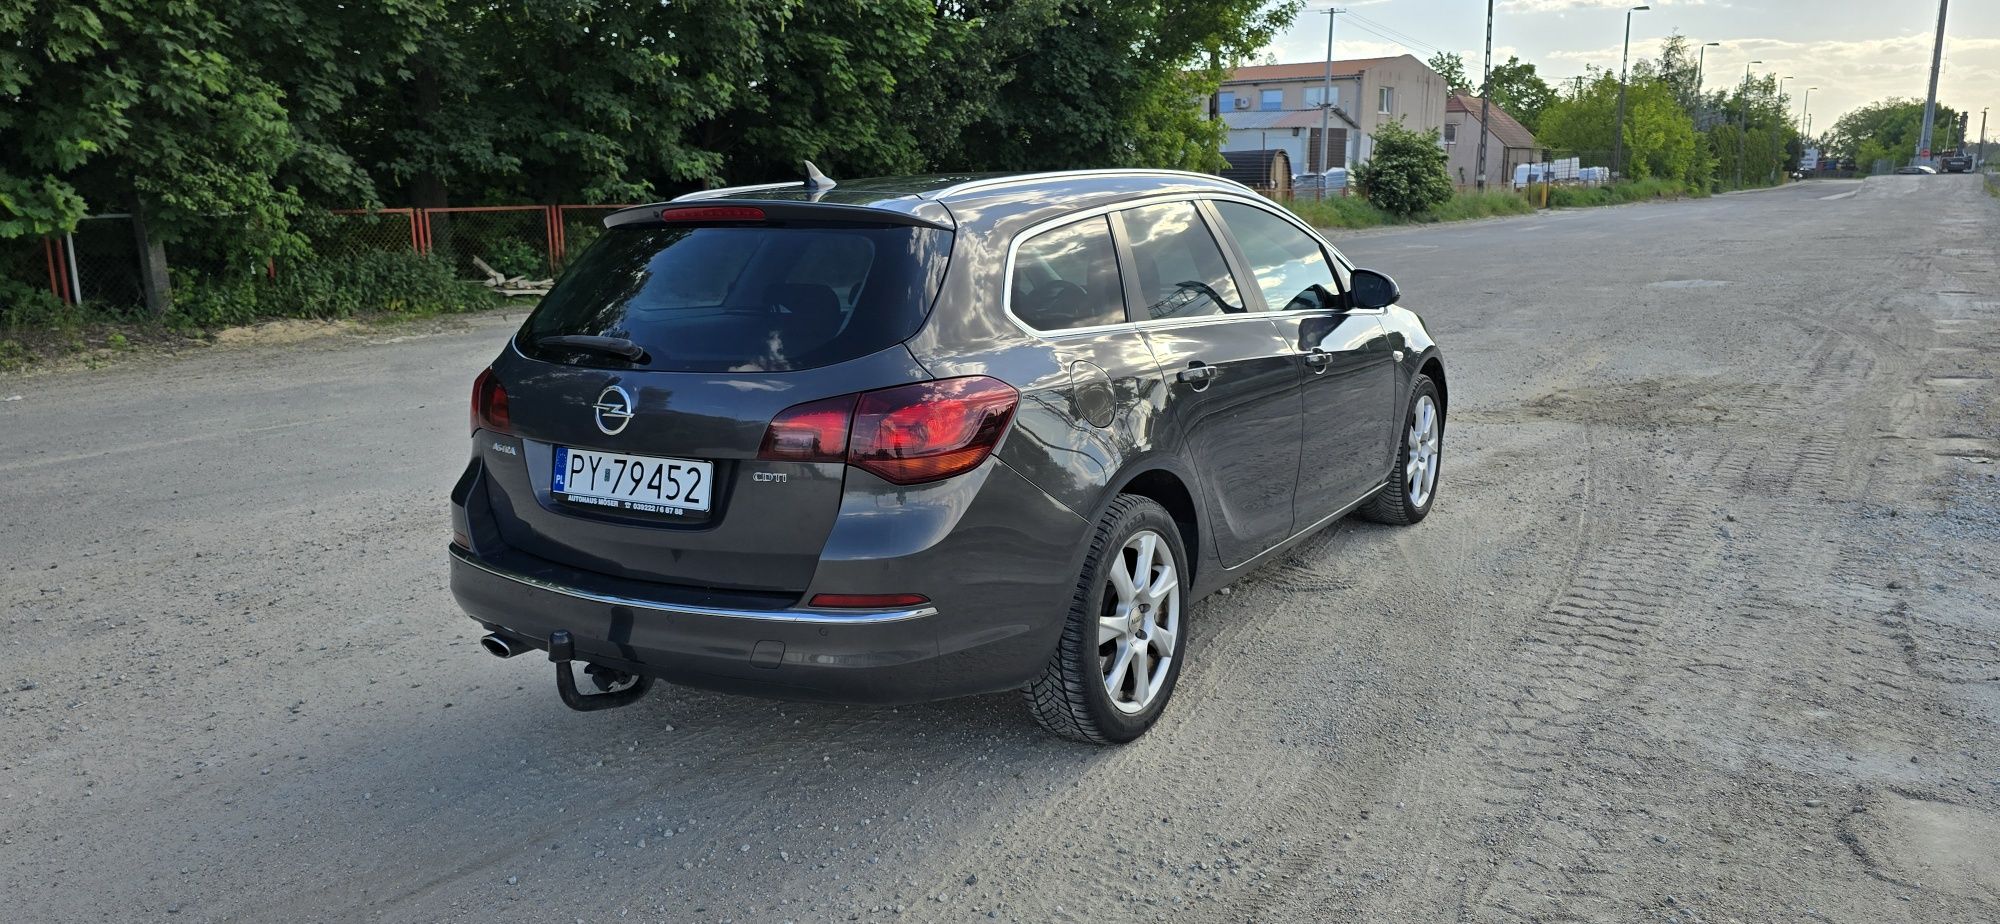 Opel Astra Kombi, 2.0 Diesel, bdb stan, bezwypadkowa, serwisowana